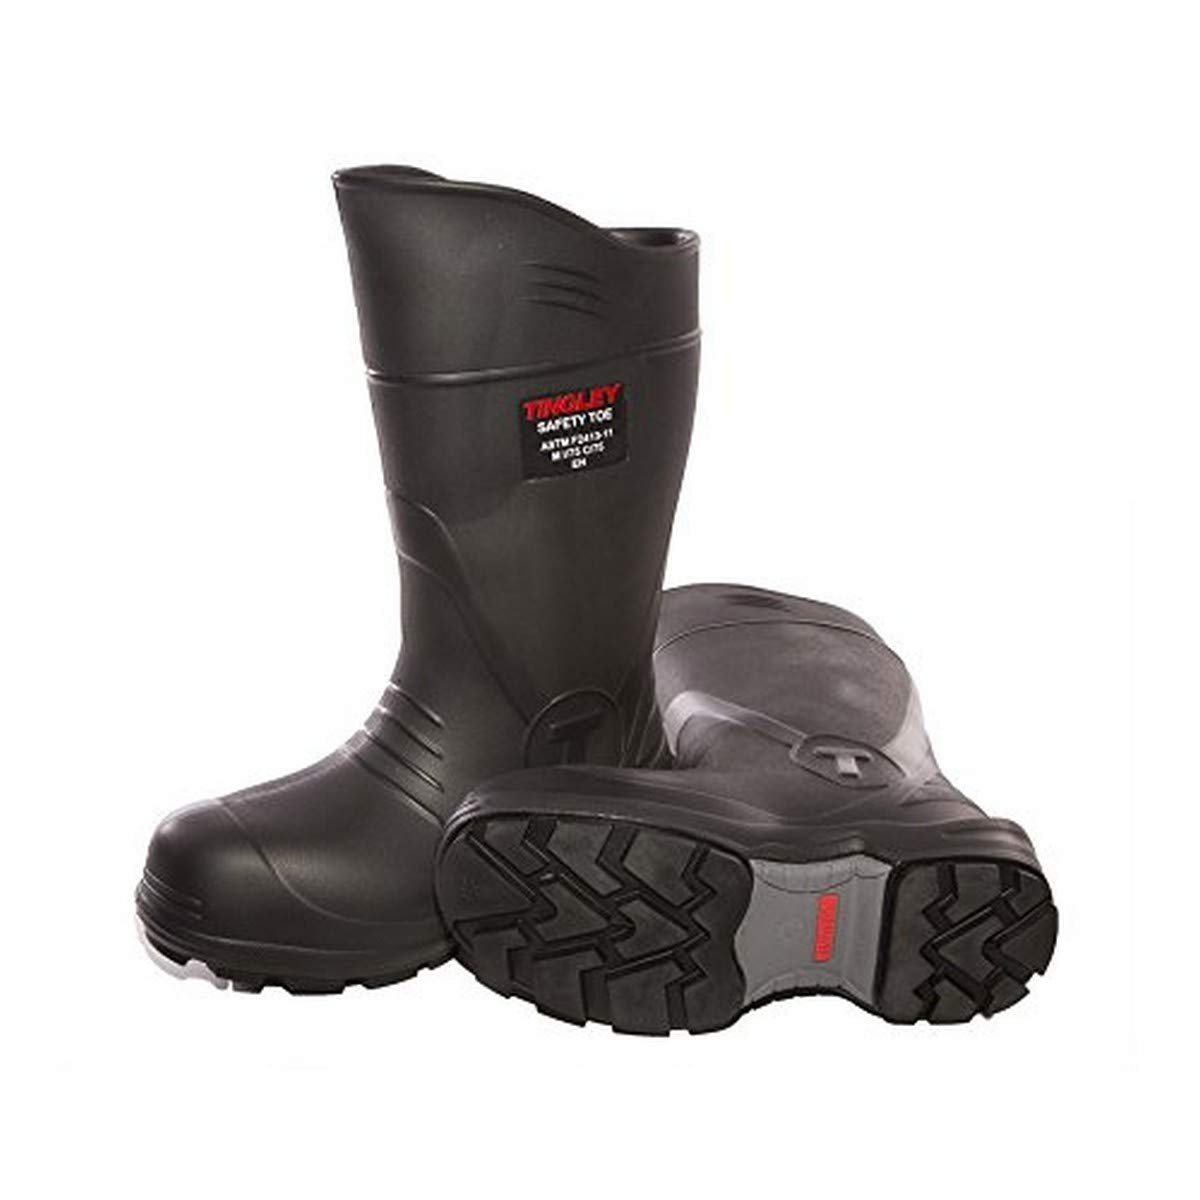 Flite composite safety-toe
boot Black/Black Size 12